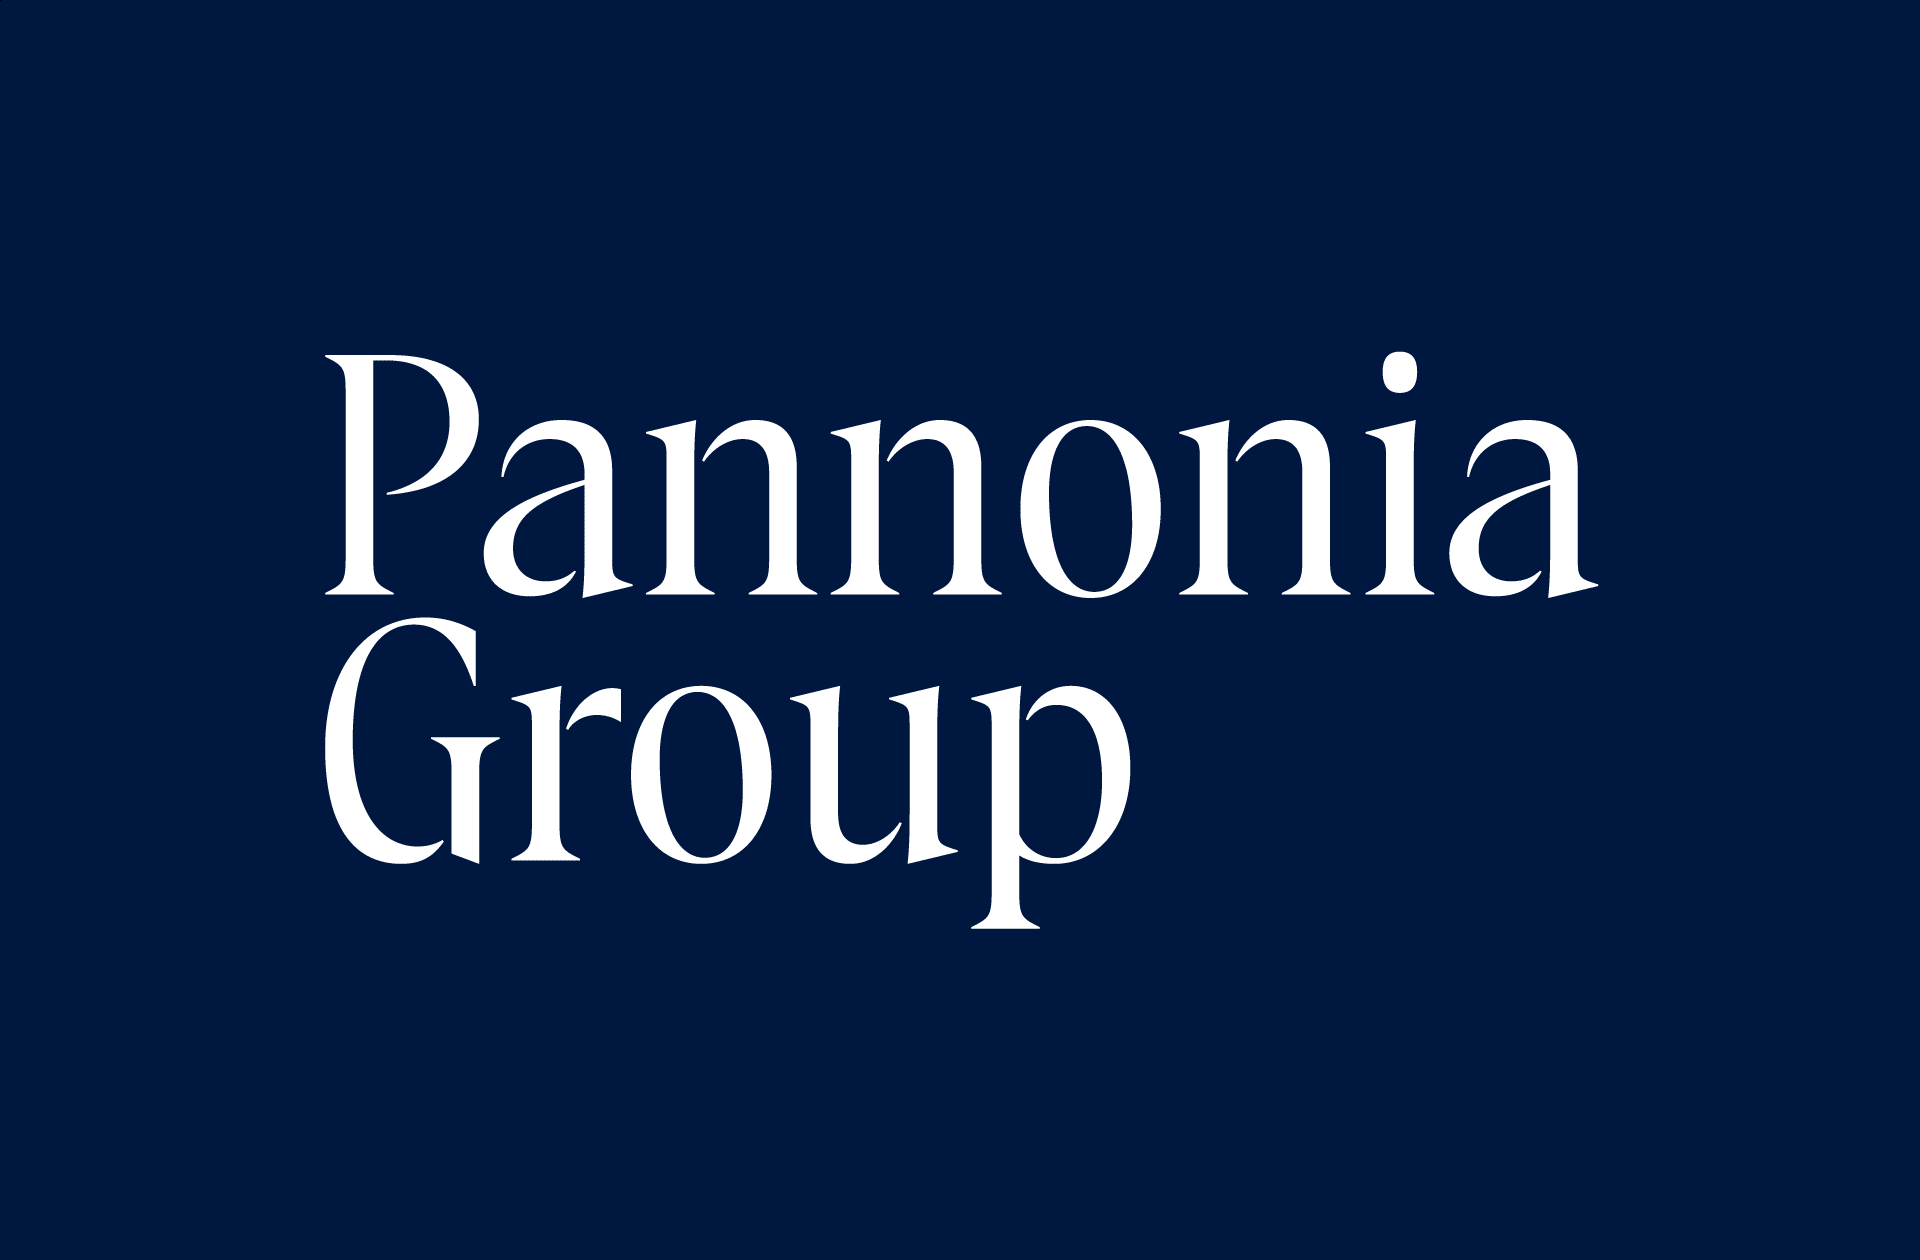 Custom Fonts: Pannonia Group